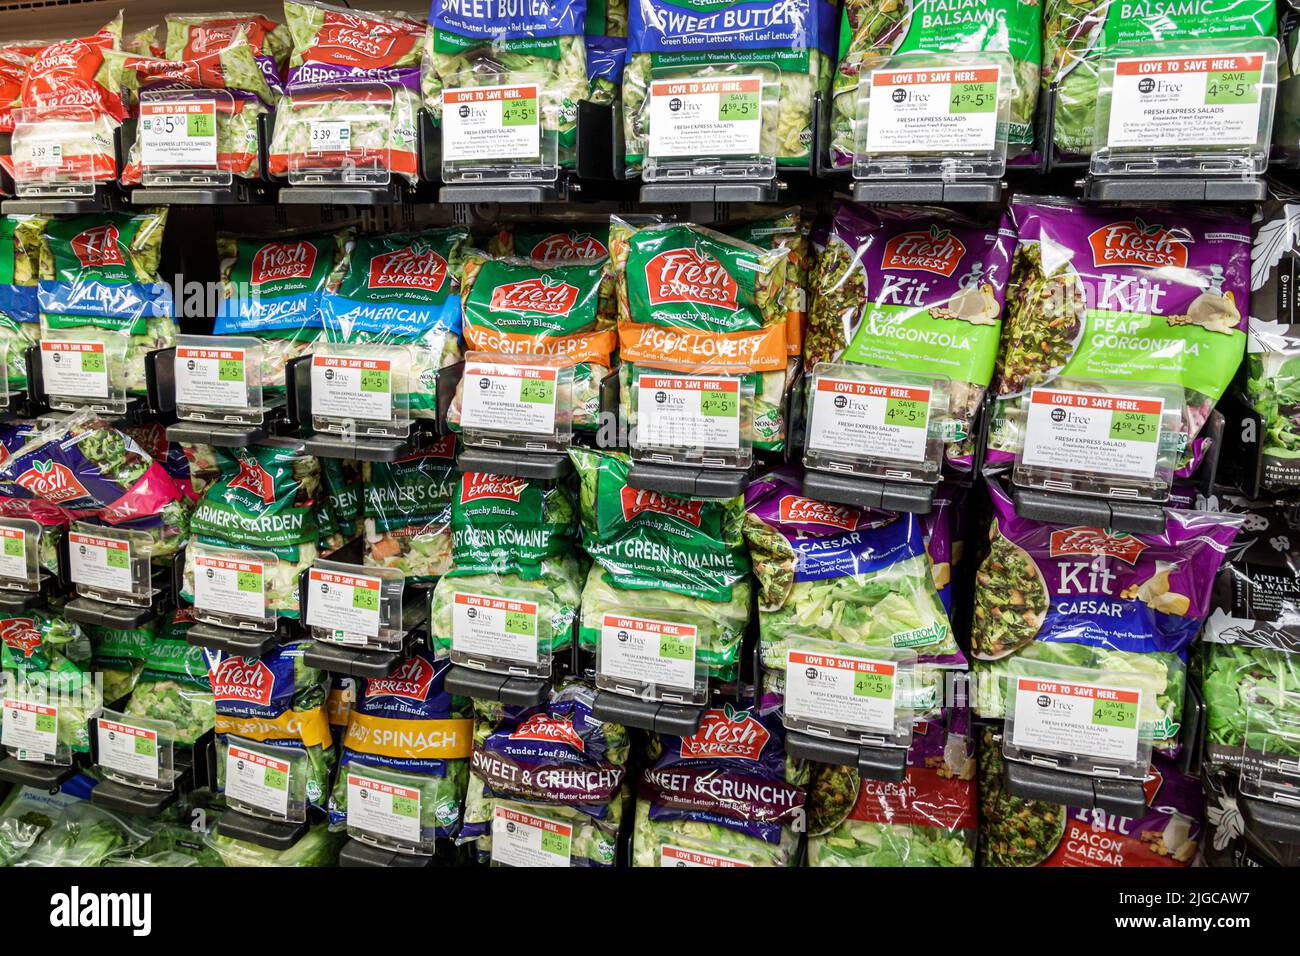 Miami Beach Florida, Publix tienda de comestibles supermercado alimentos interior interior, mostrar venta fresco Express ensalada kit bolsas Foto de stock